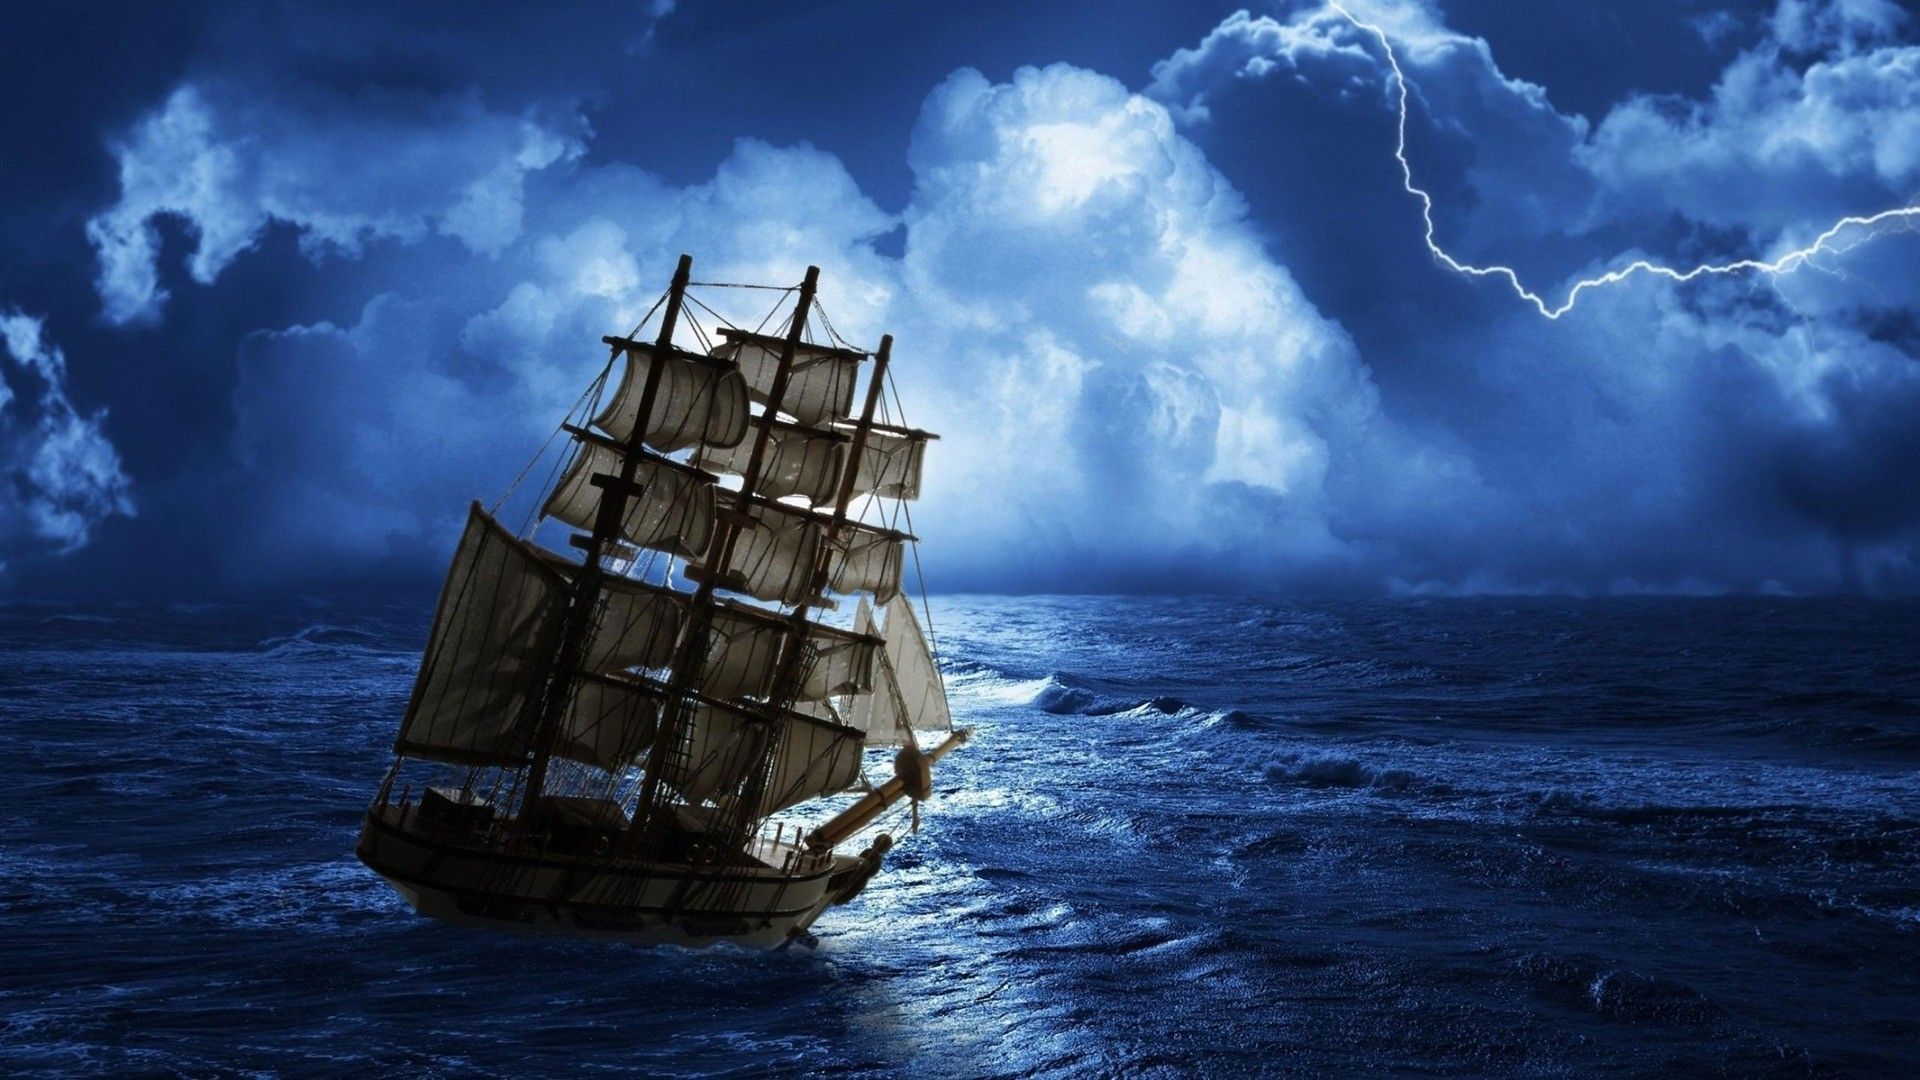 Ocean clouds storm fantasy art sailing skyscapes ships wallpaper